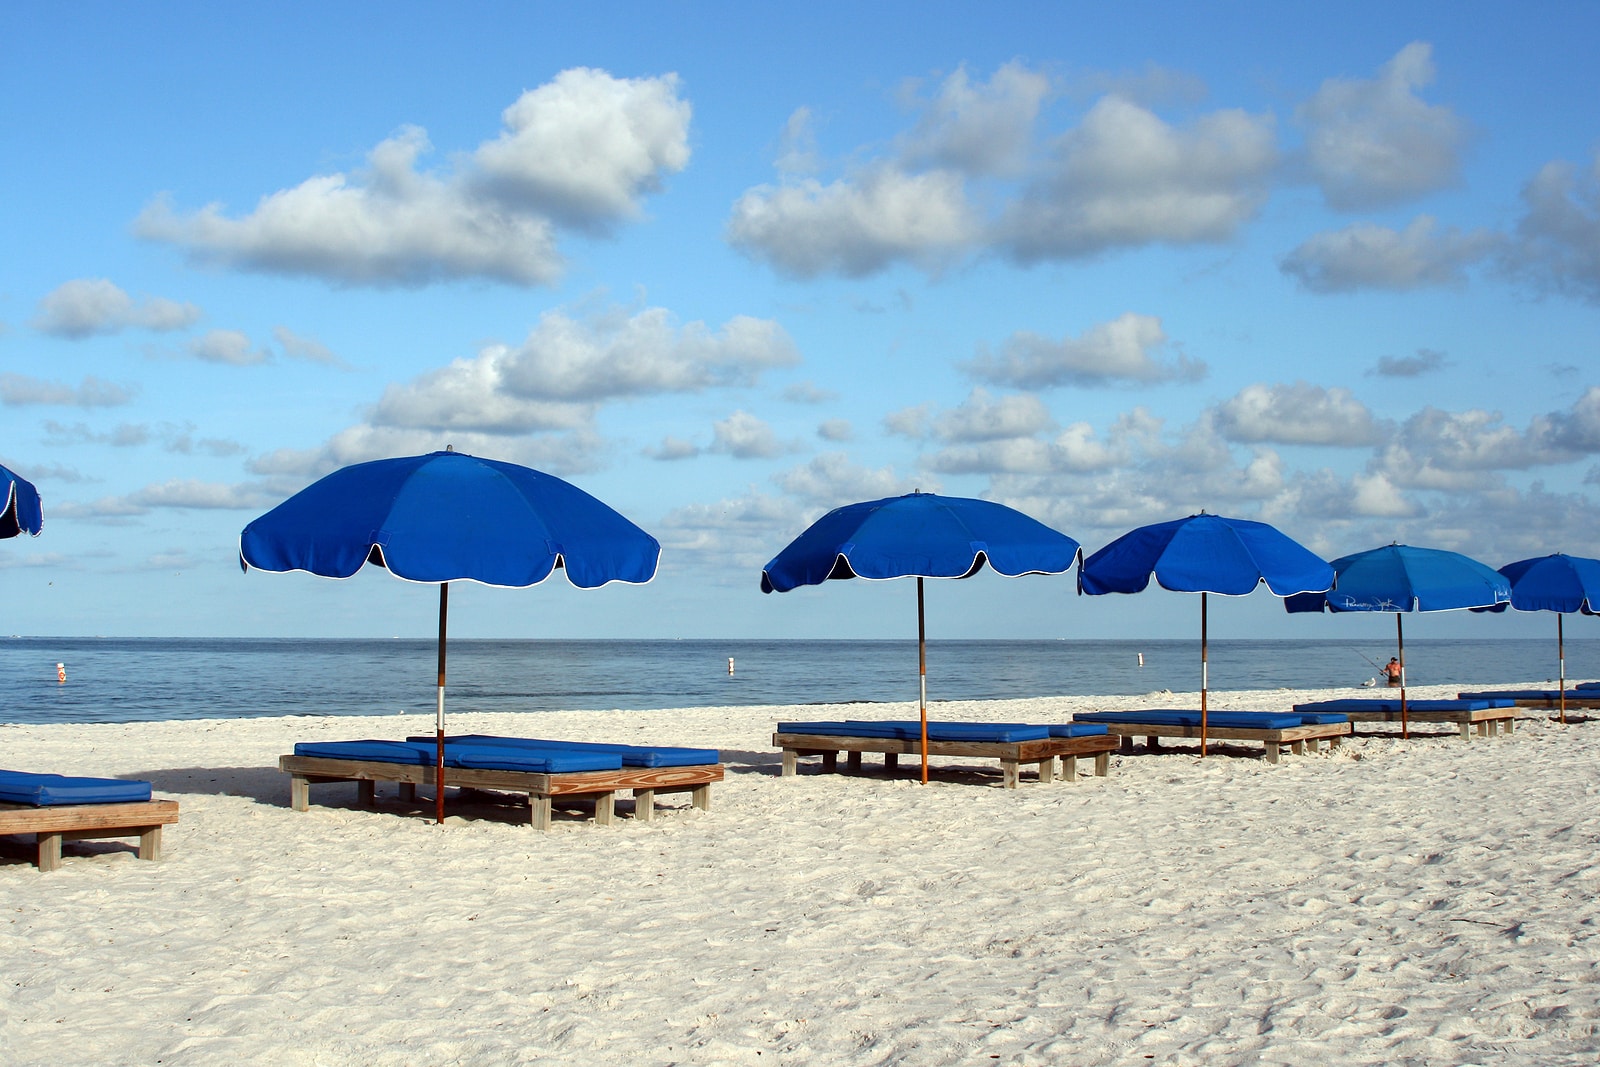 Booking Express Travel Reviews Florida Hot Spots 2